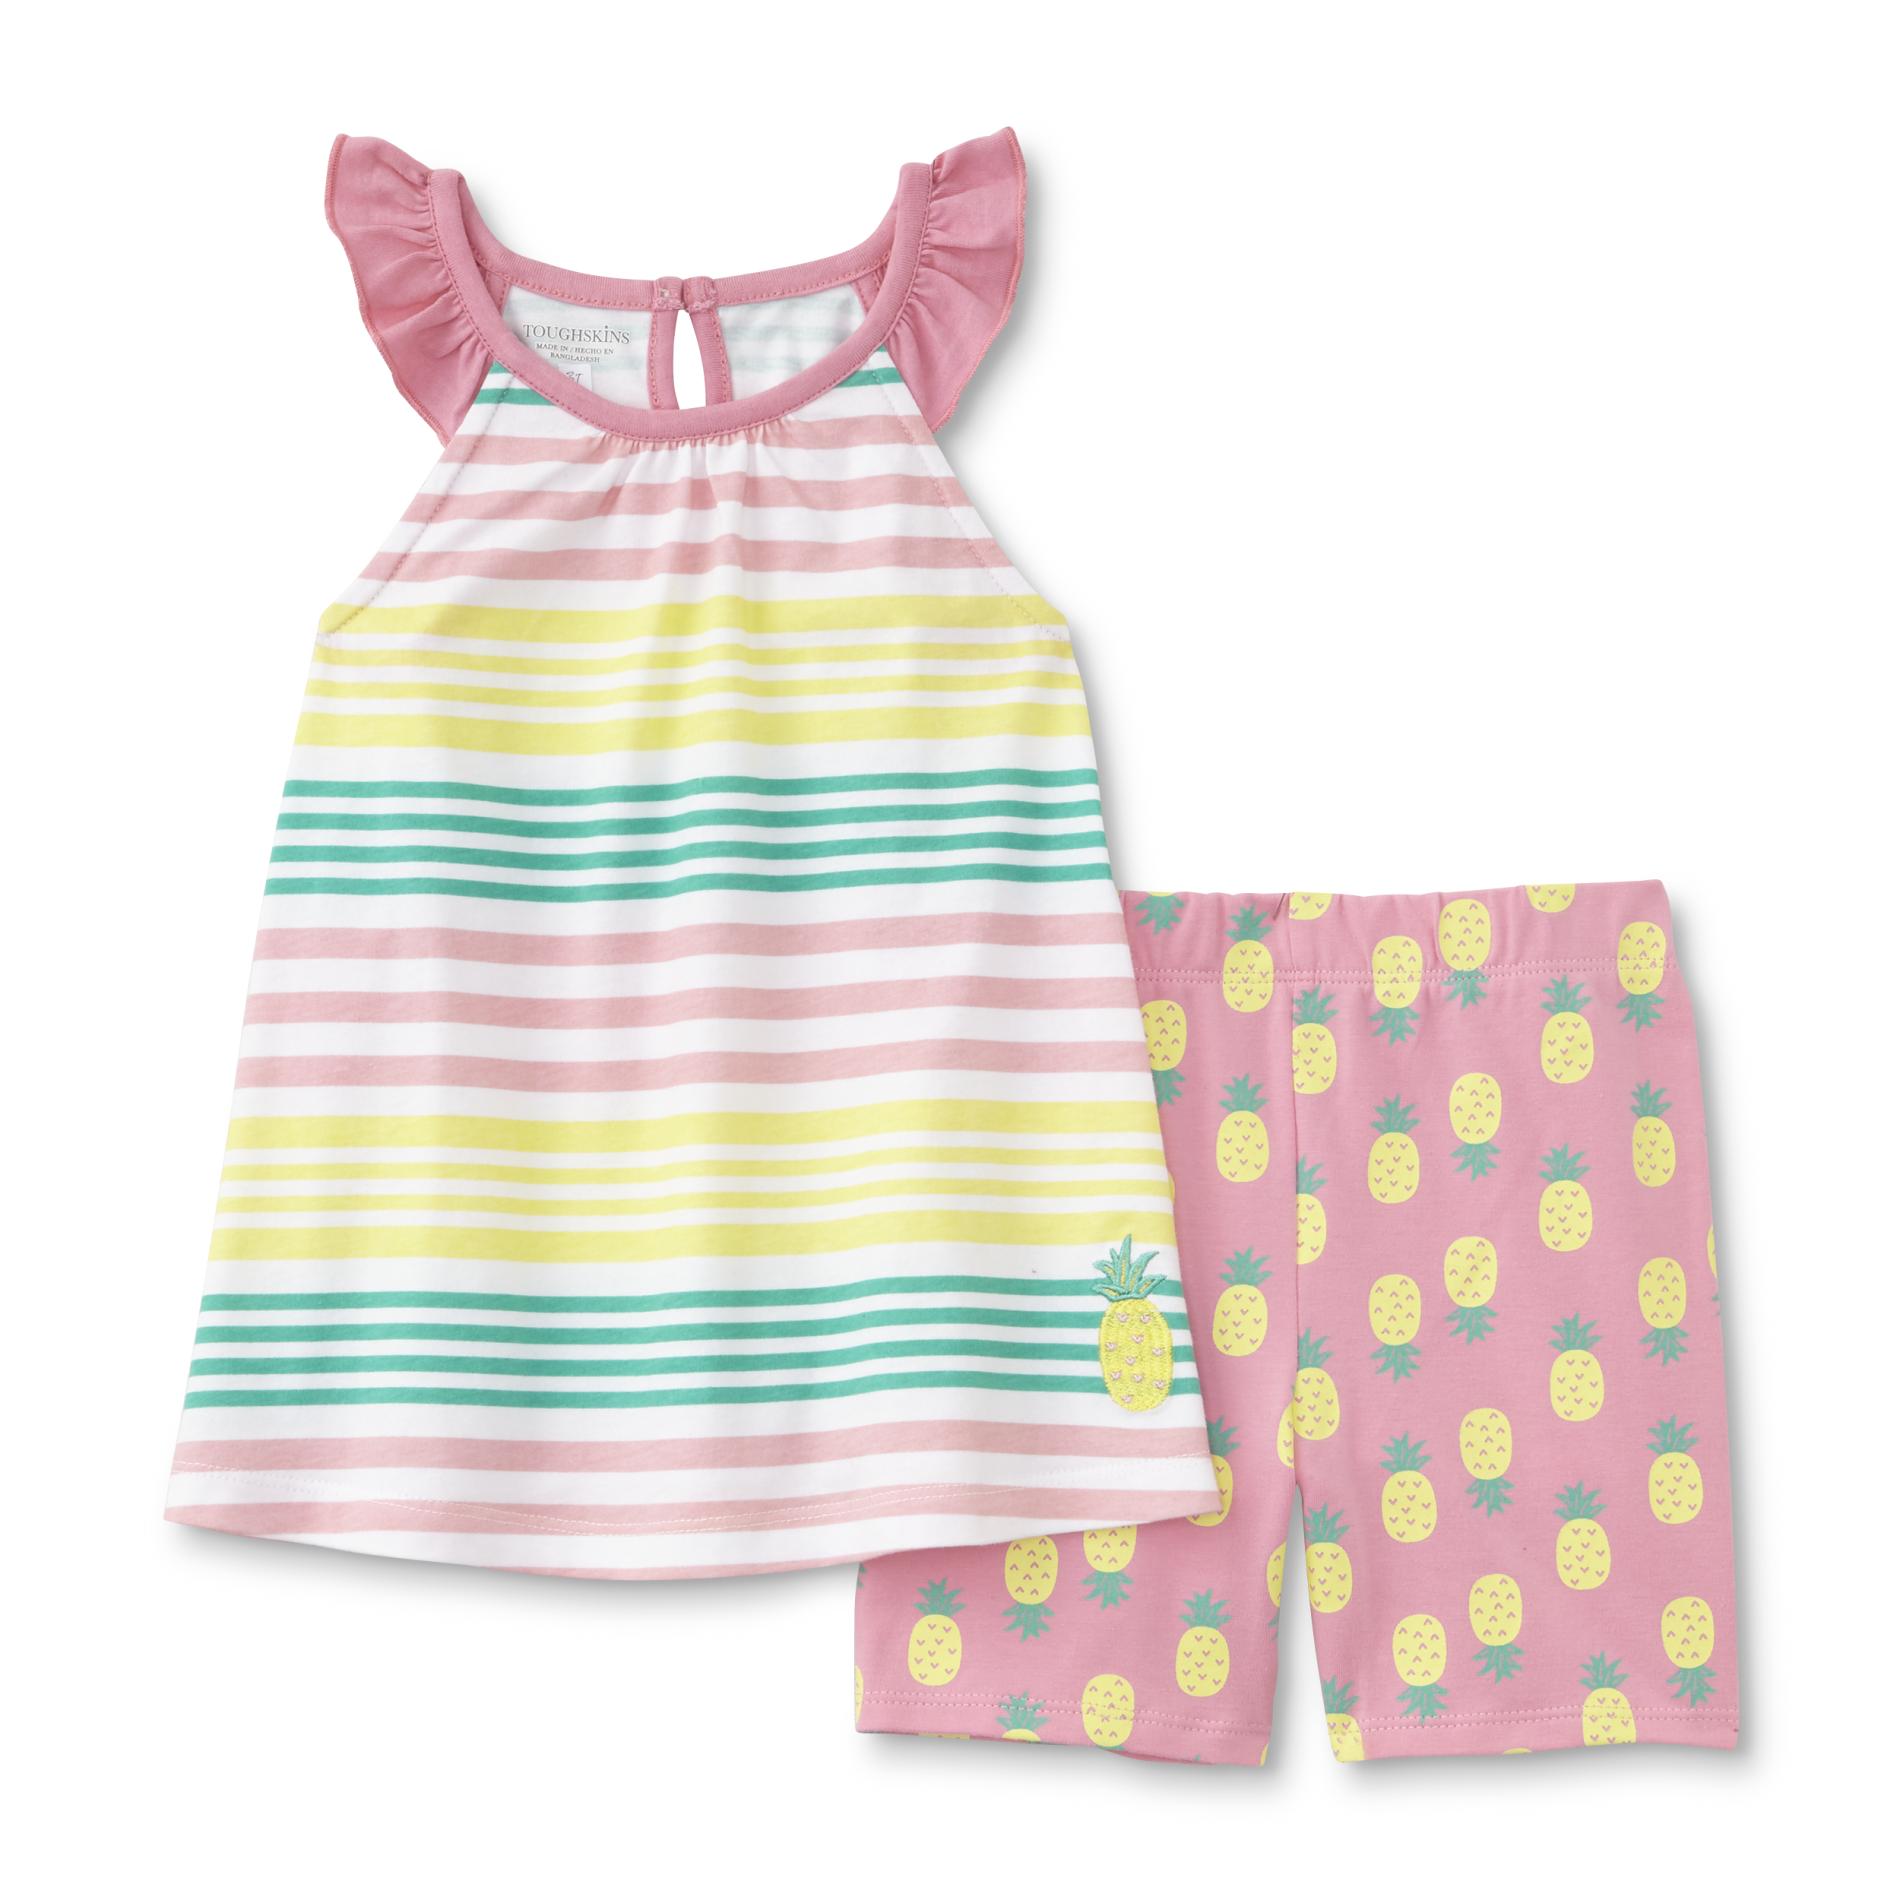 Toughskins Infant & Toddler Girl's Tunic & Shorts - Striped